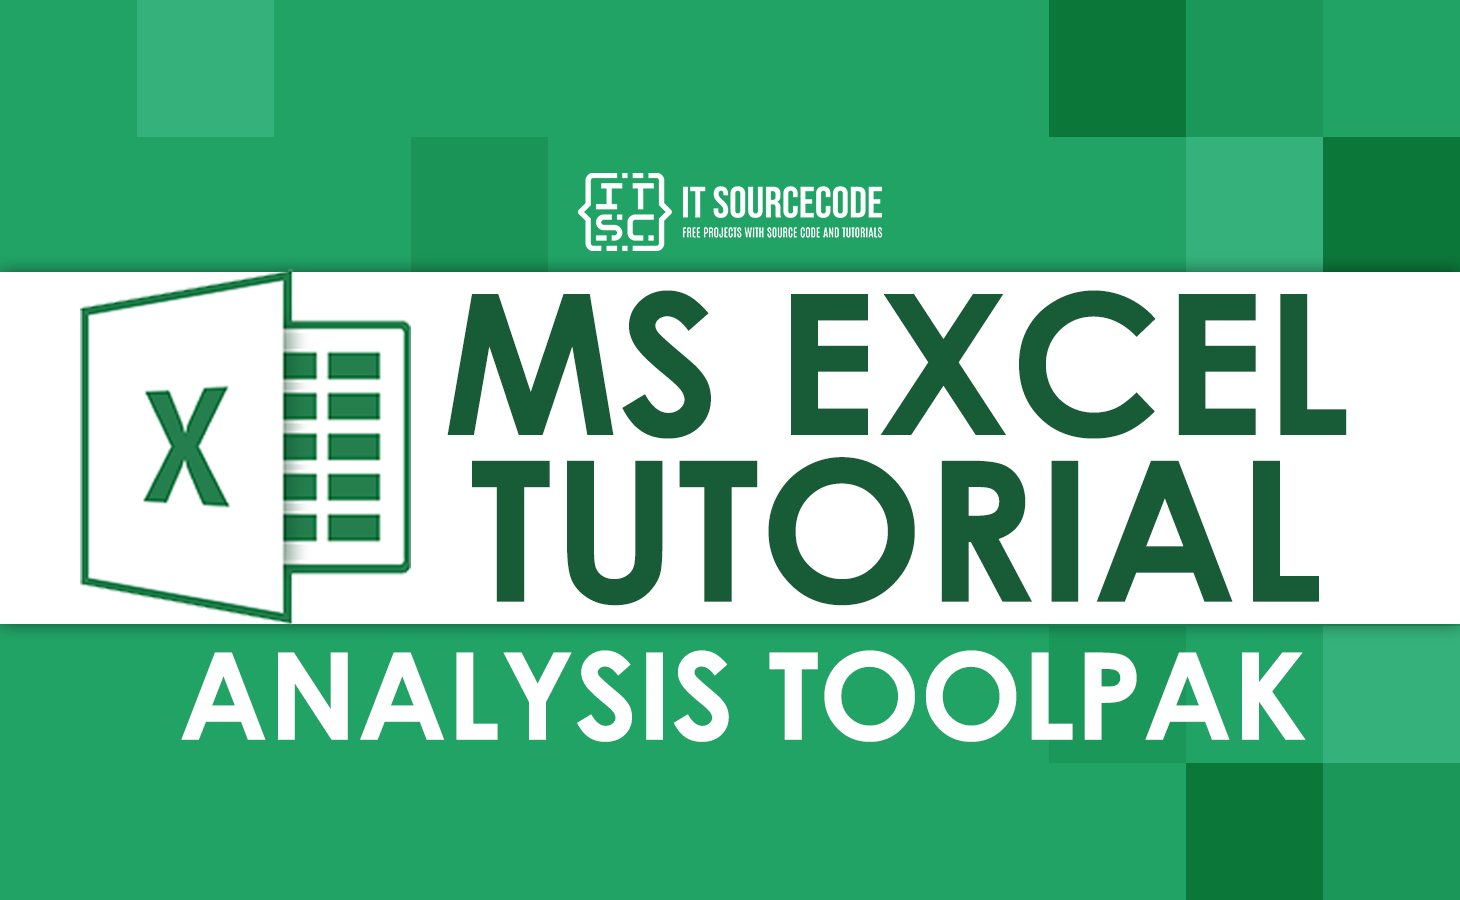 Excel analysis toolpak